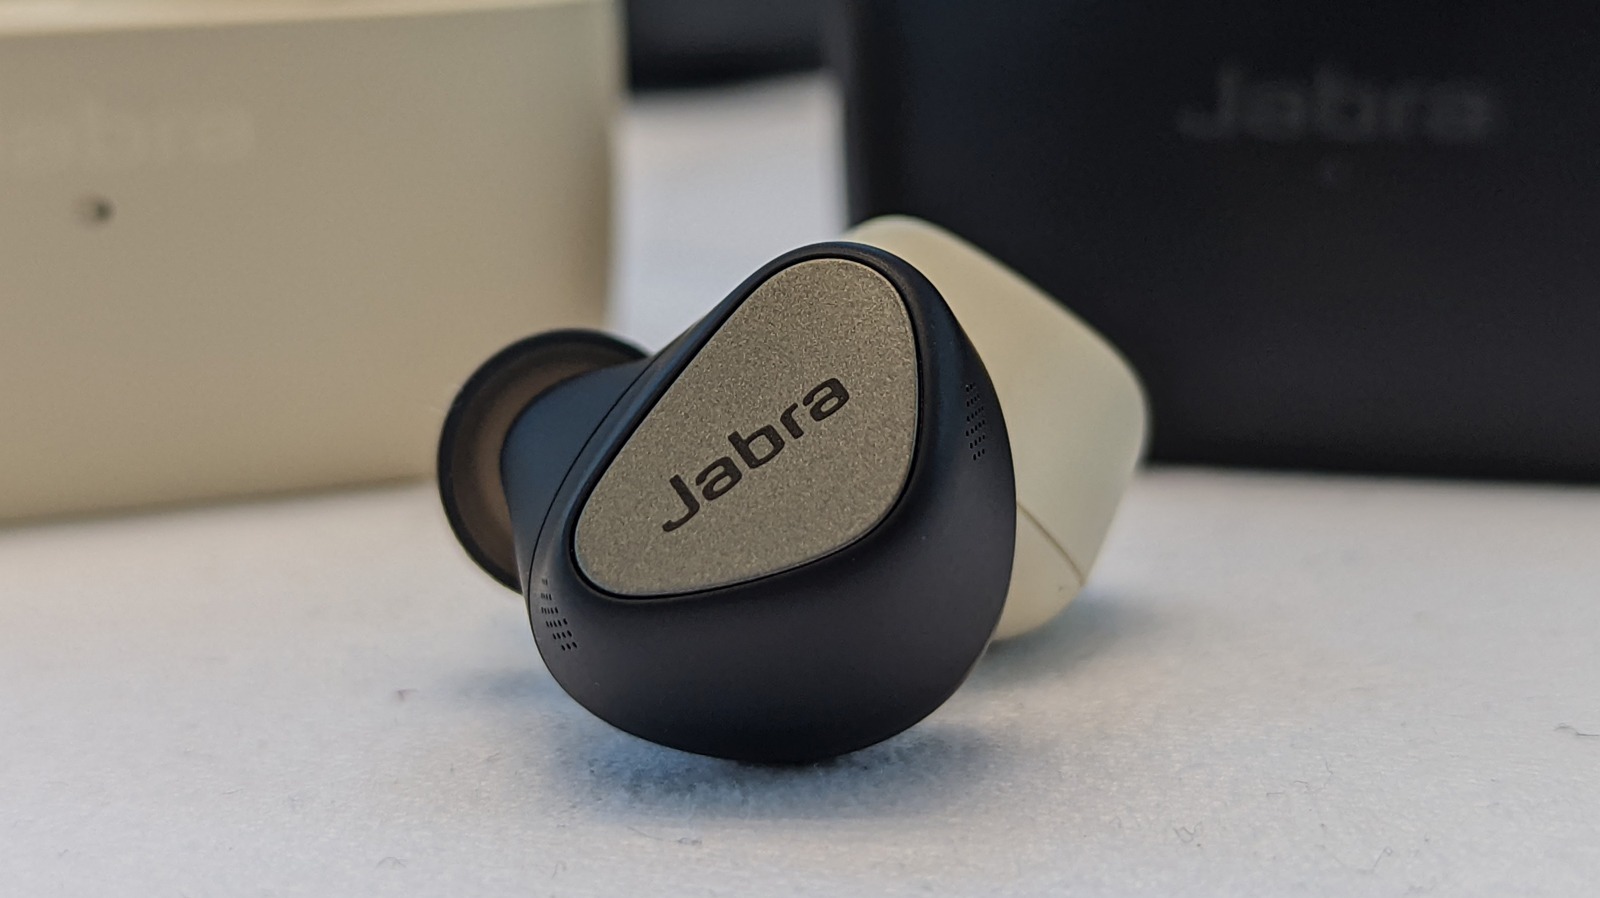 Jabra Elite 5 True Wireless Earbuds with Hybrid ANC